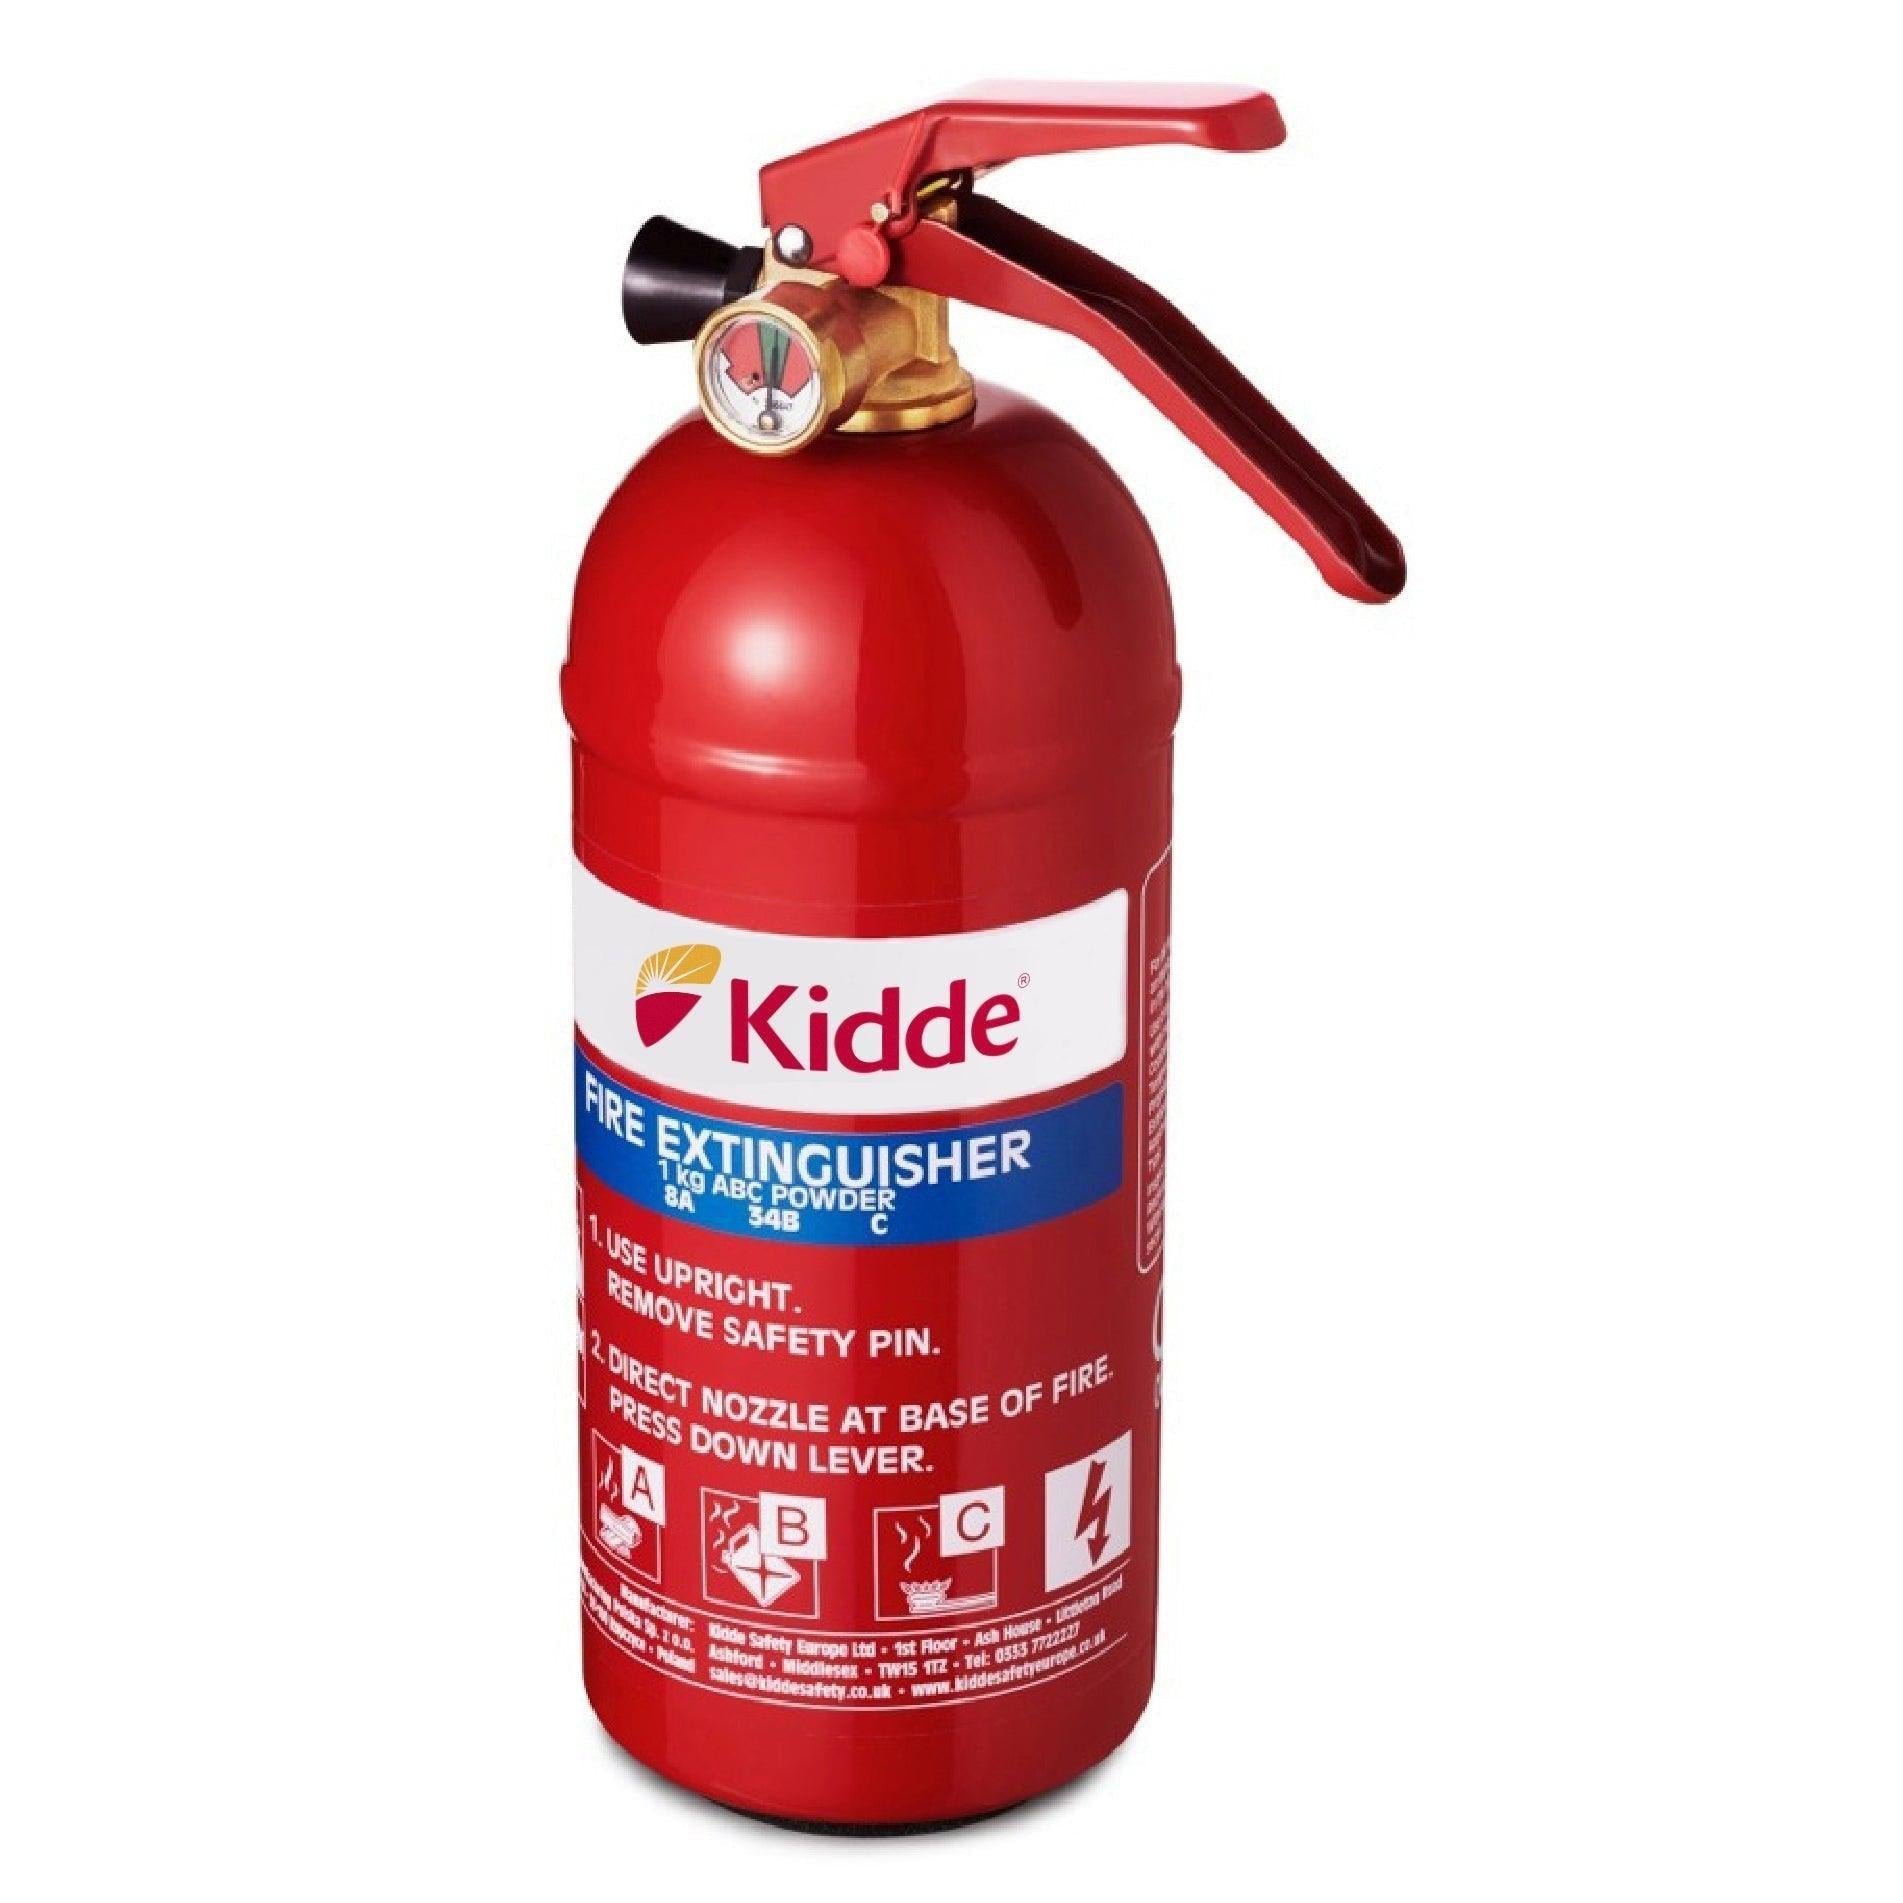 Kidde 1KG Multi Purpose Fire Extinguisher - FSK1KG (7513156780220)